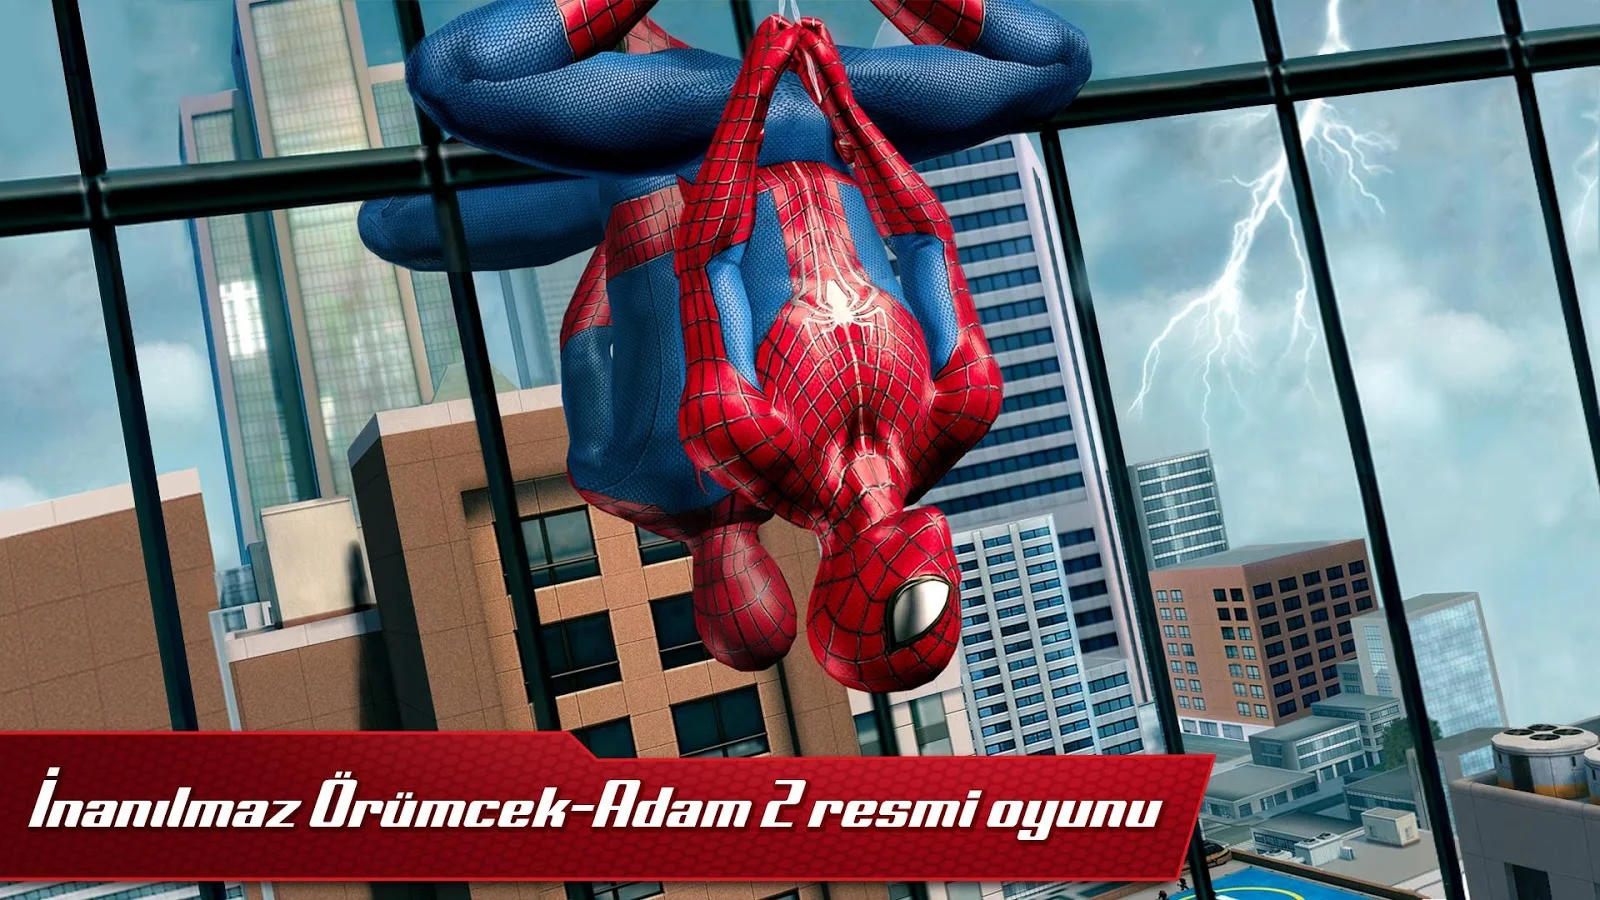 The Amazing Spider Man 2 Apk Data